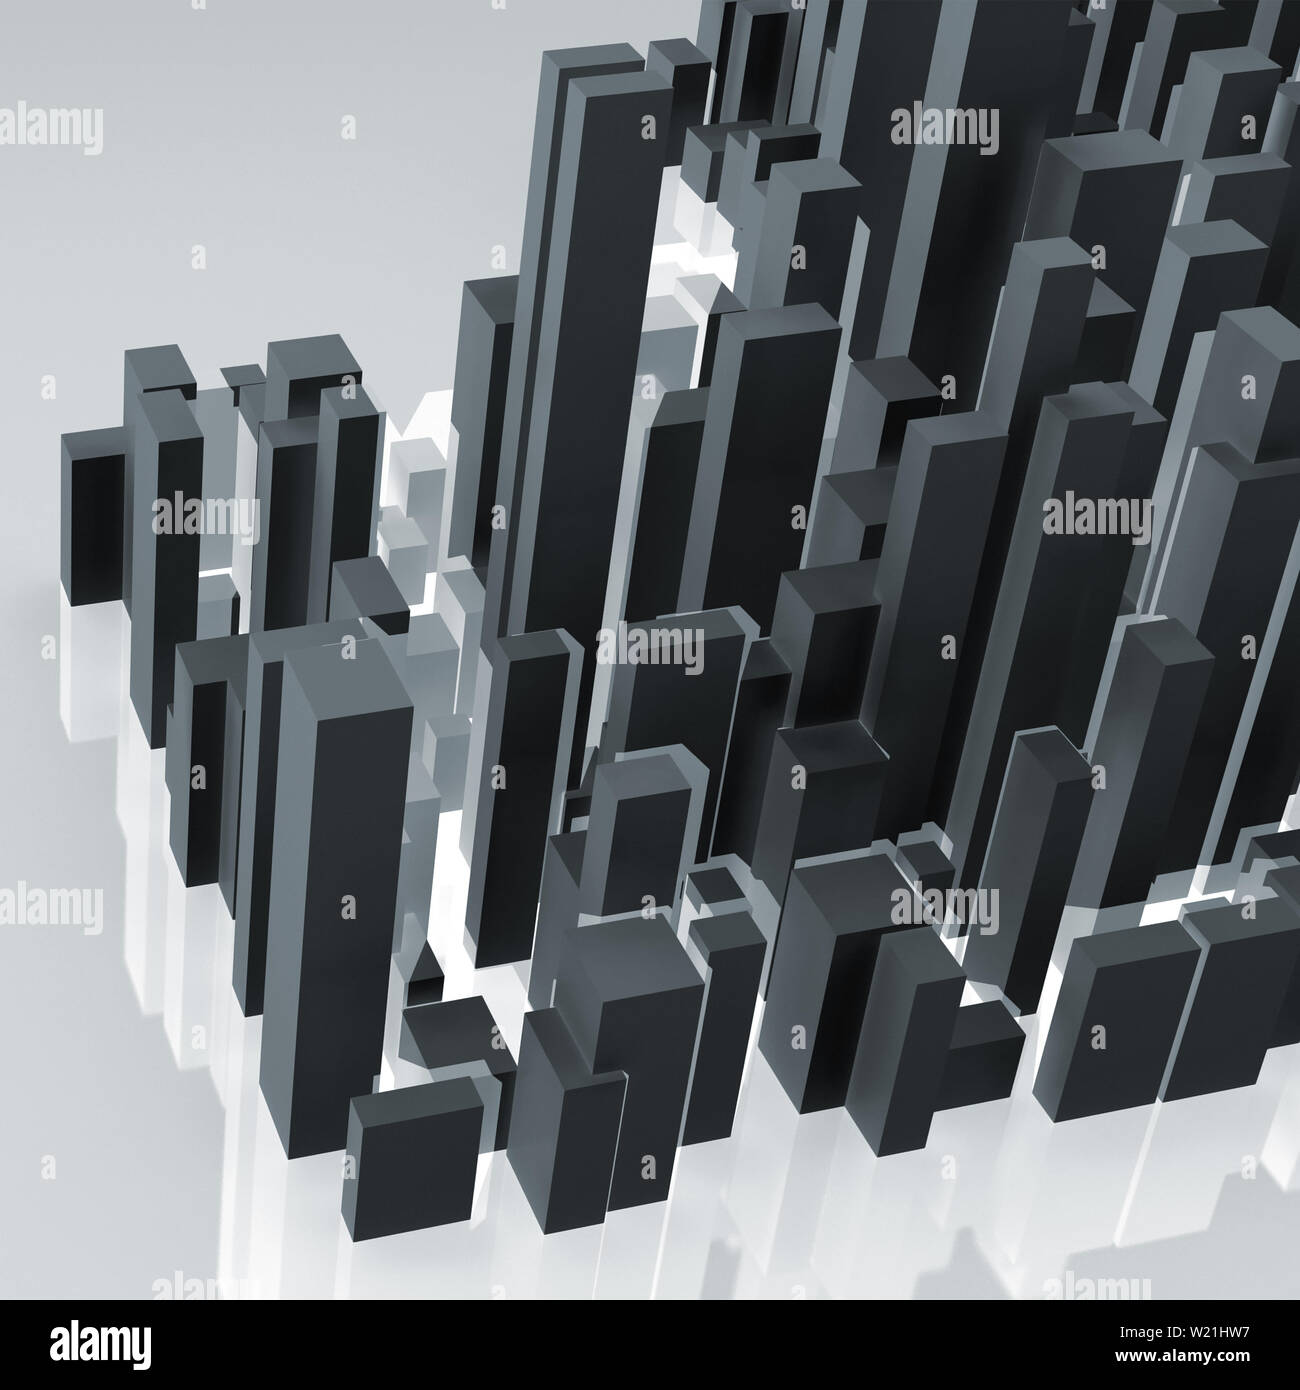 Abstract dark city block. Digital model with black primitive geometric skyscrapers, 3d rendering illustration Stock Photo